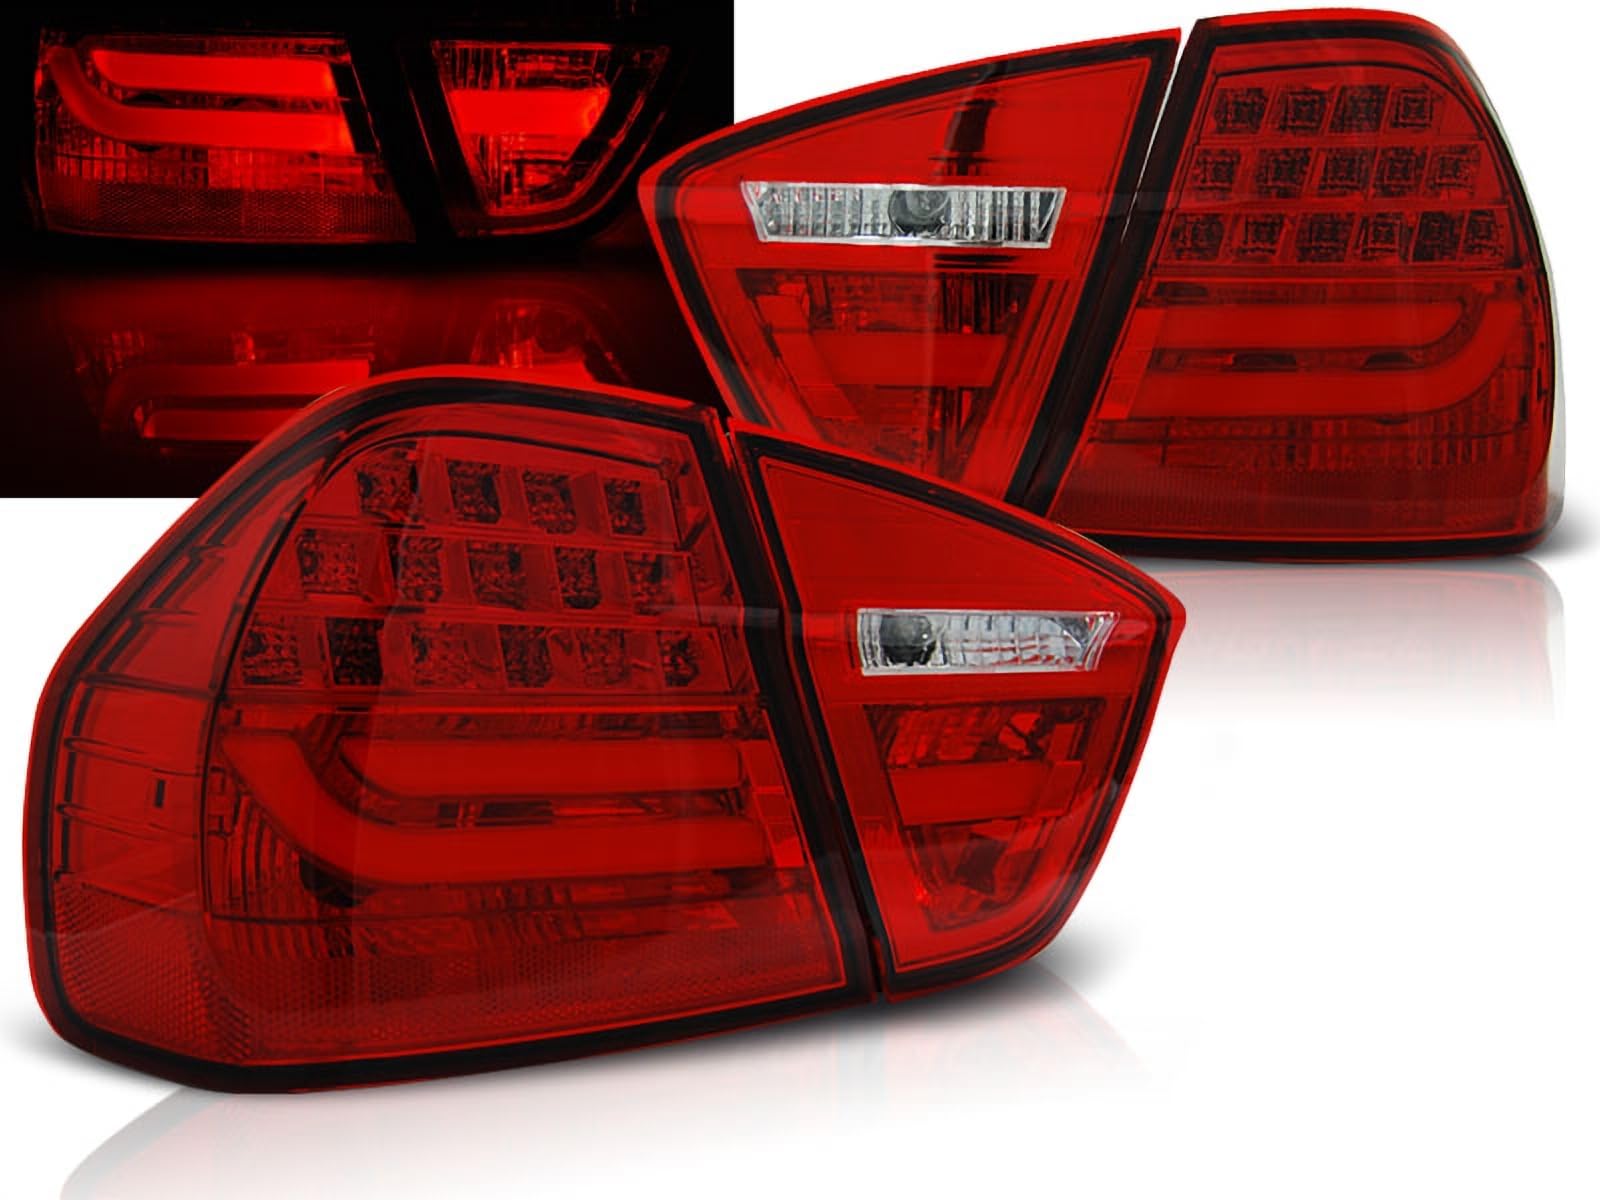 LED Lightbar Rückleuchten Set rot für BMW E90 03.2005-08.2008 von CR-Lights